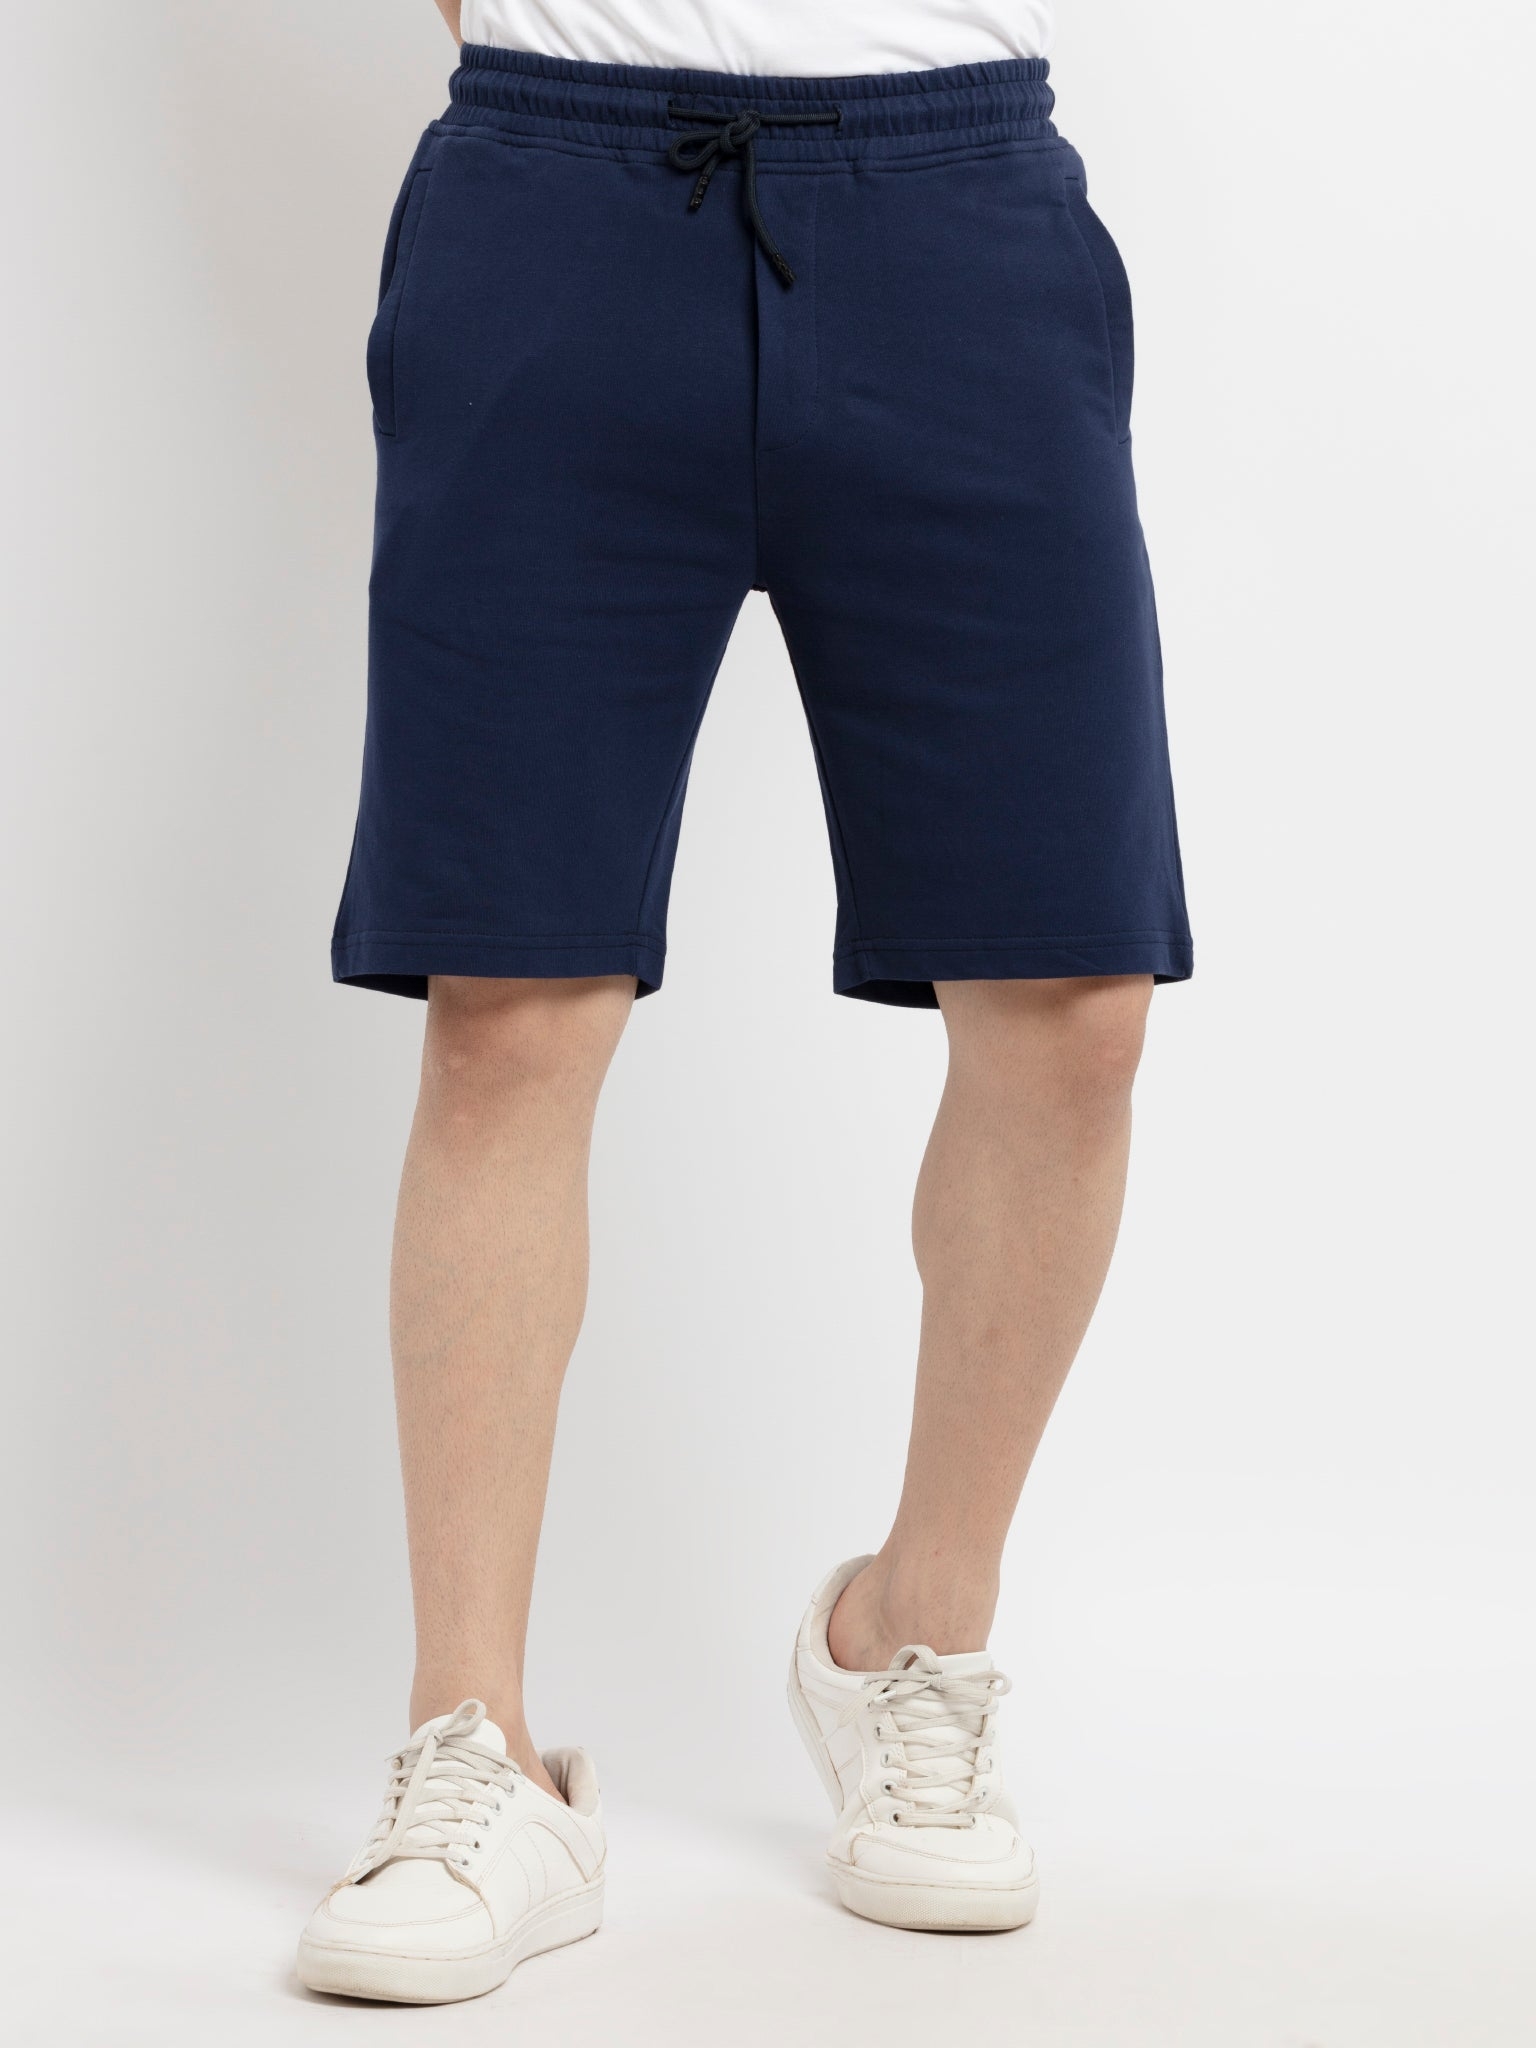 Status Quo | Men's Solid NAVY Shorts